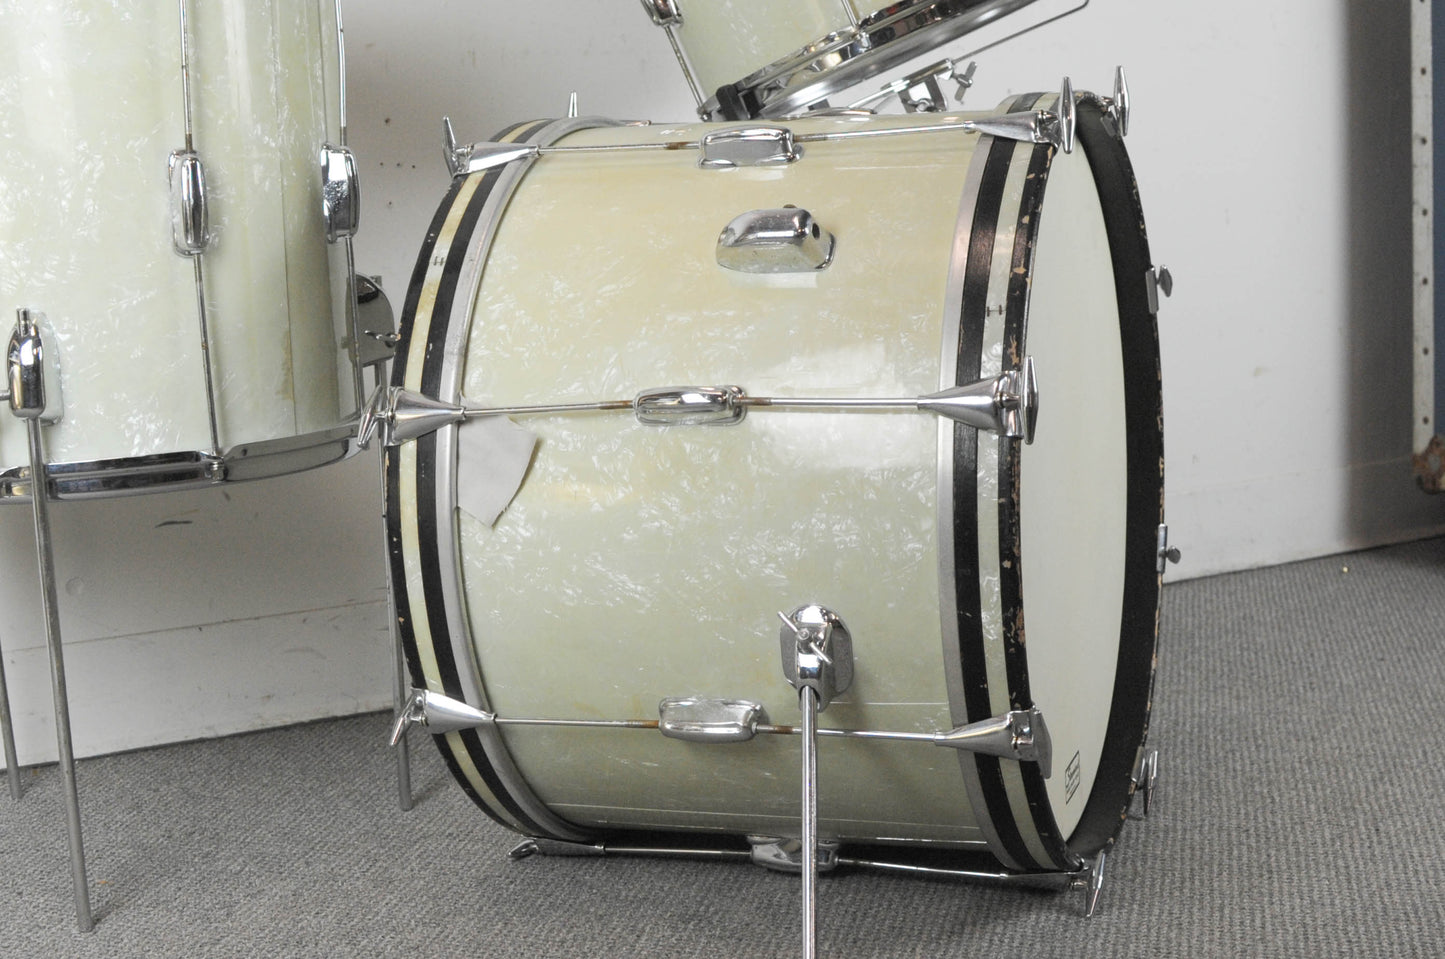 1965 Slingerland White Marine Pearl "Stage Band" Drum Set